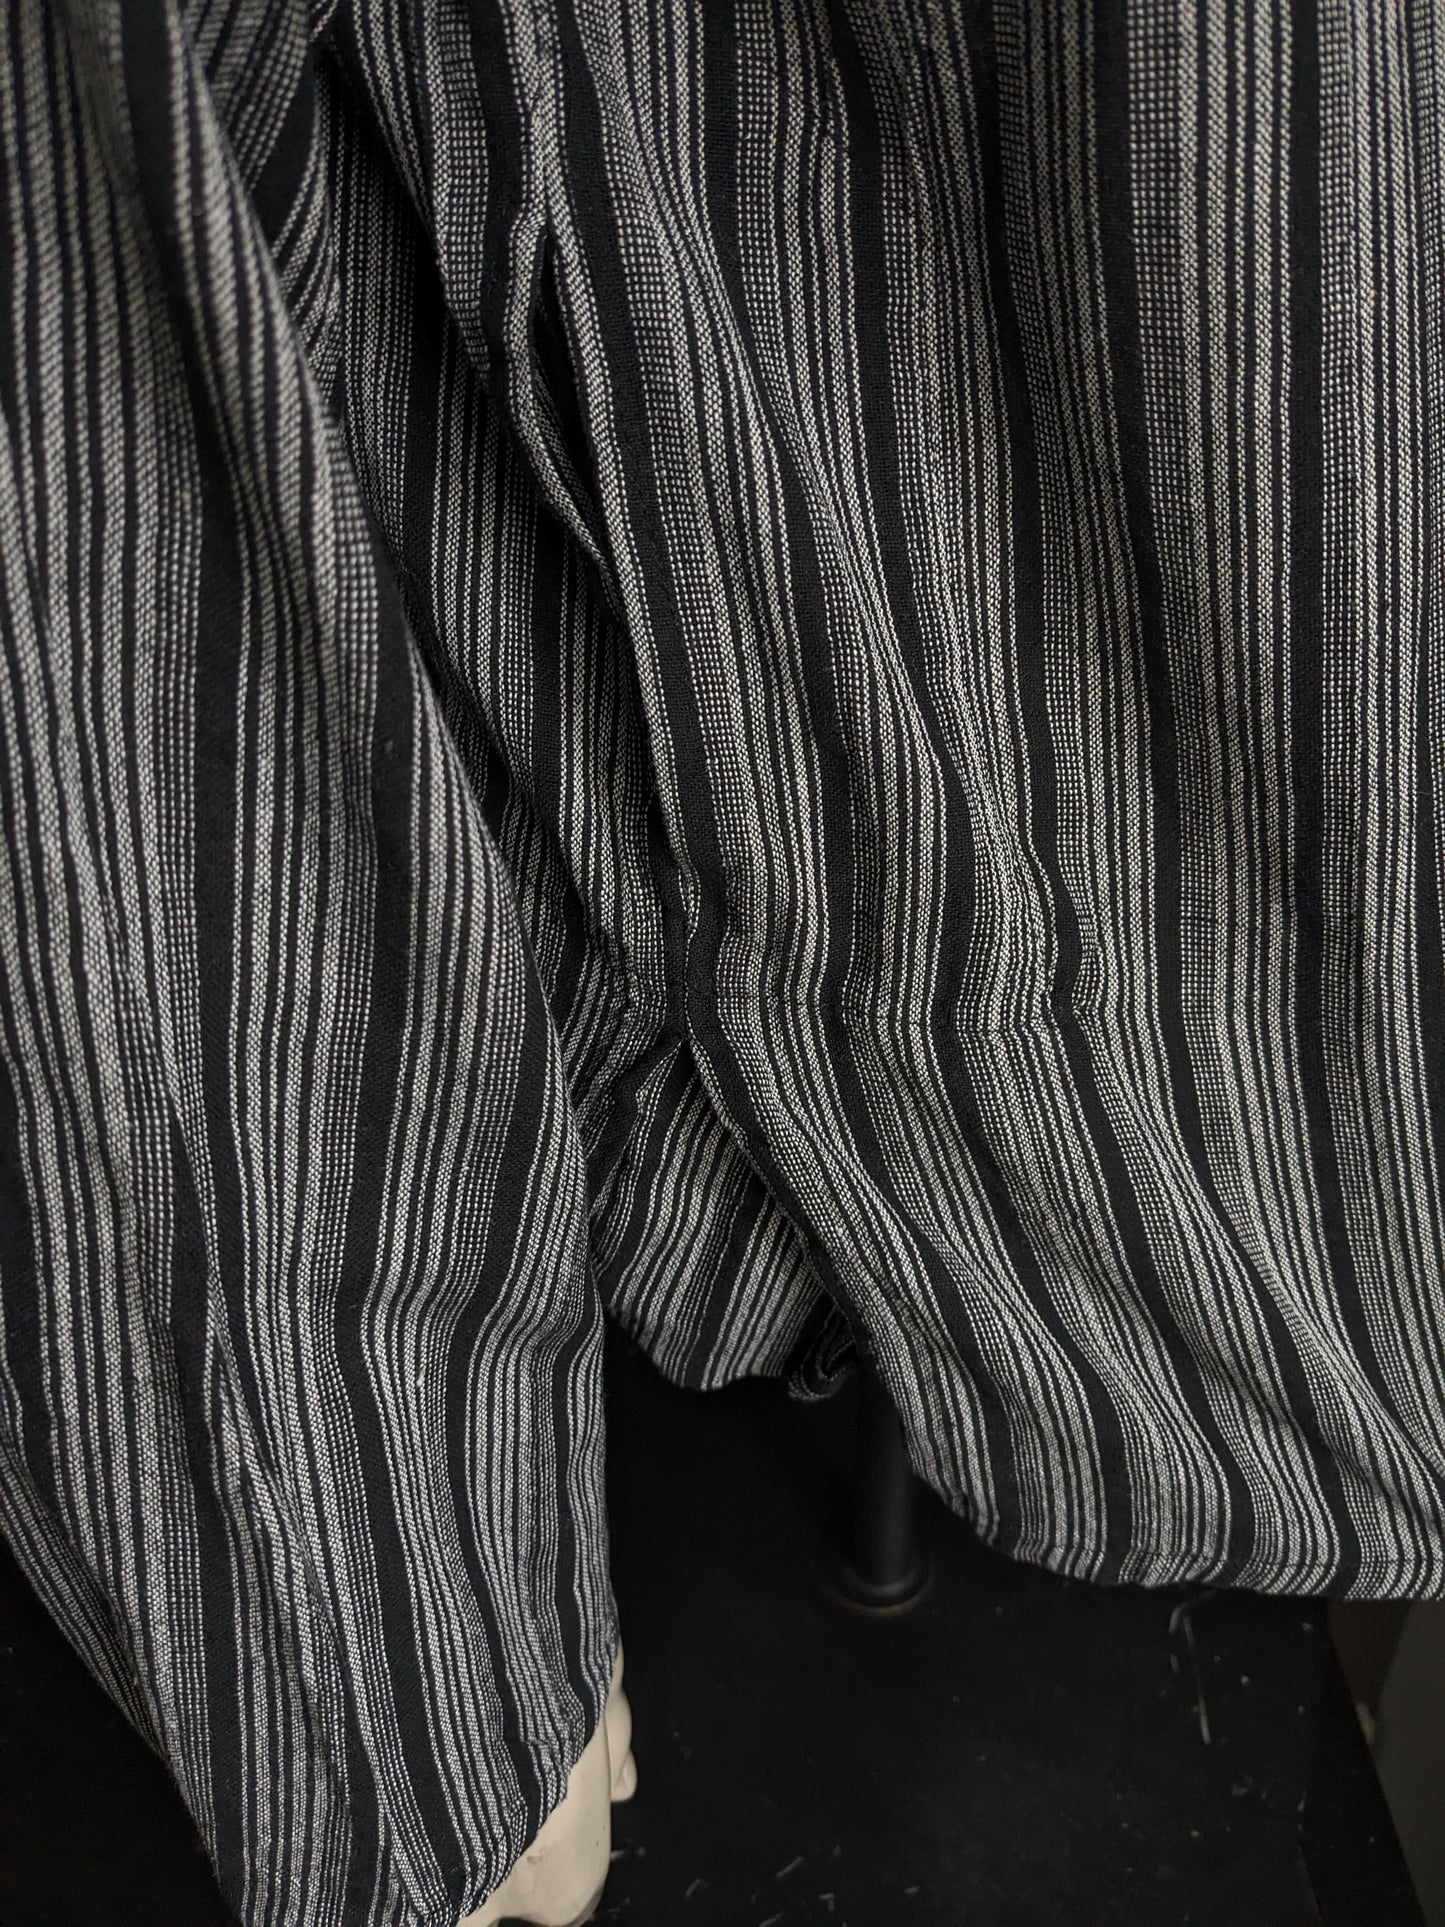 Suéter de polo Yuli Vintage con collar elevado / granjeros / mao. Gris negro rayado con bolsa. Tamaño xl.